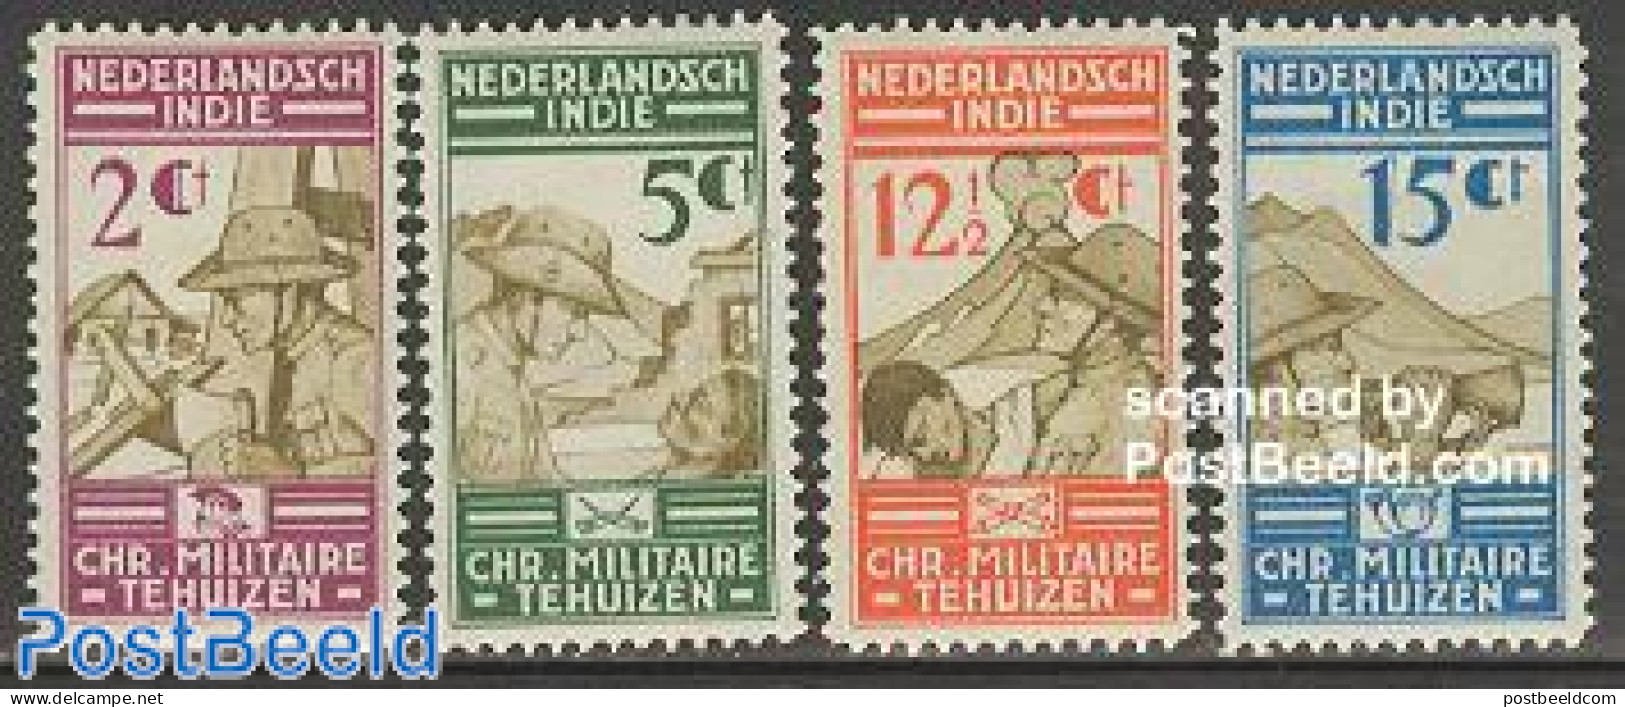 Netherlands Indies 1935 Military Association 4v, Unused (hinged), History - Militarism - Militaria